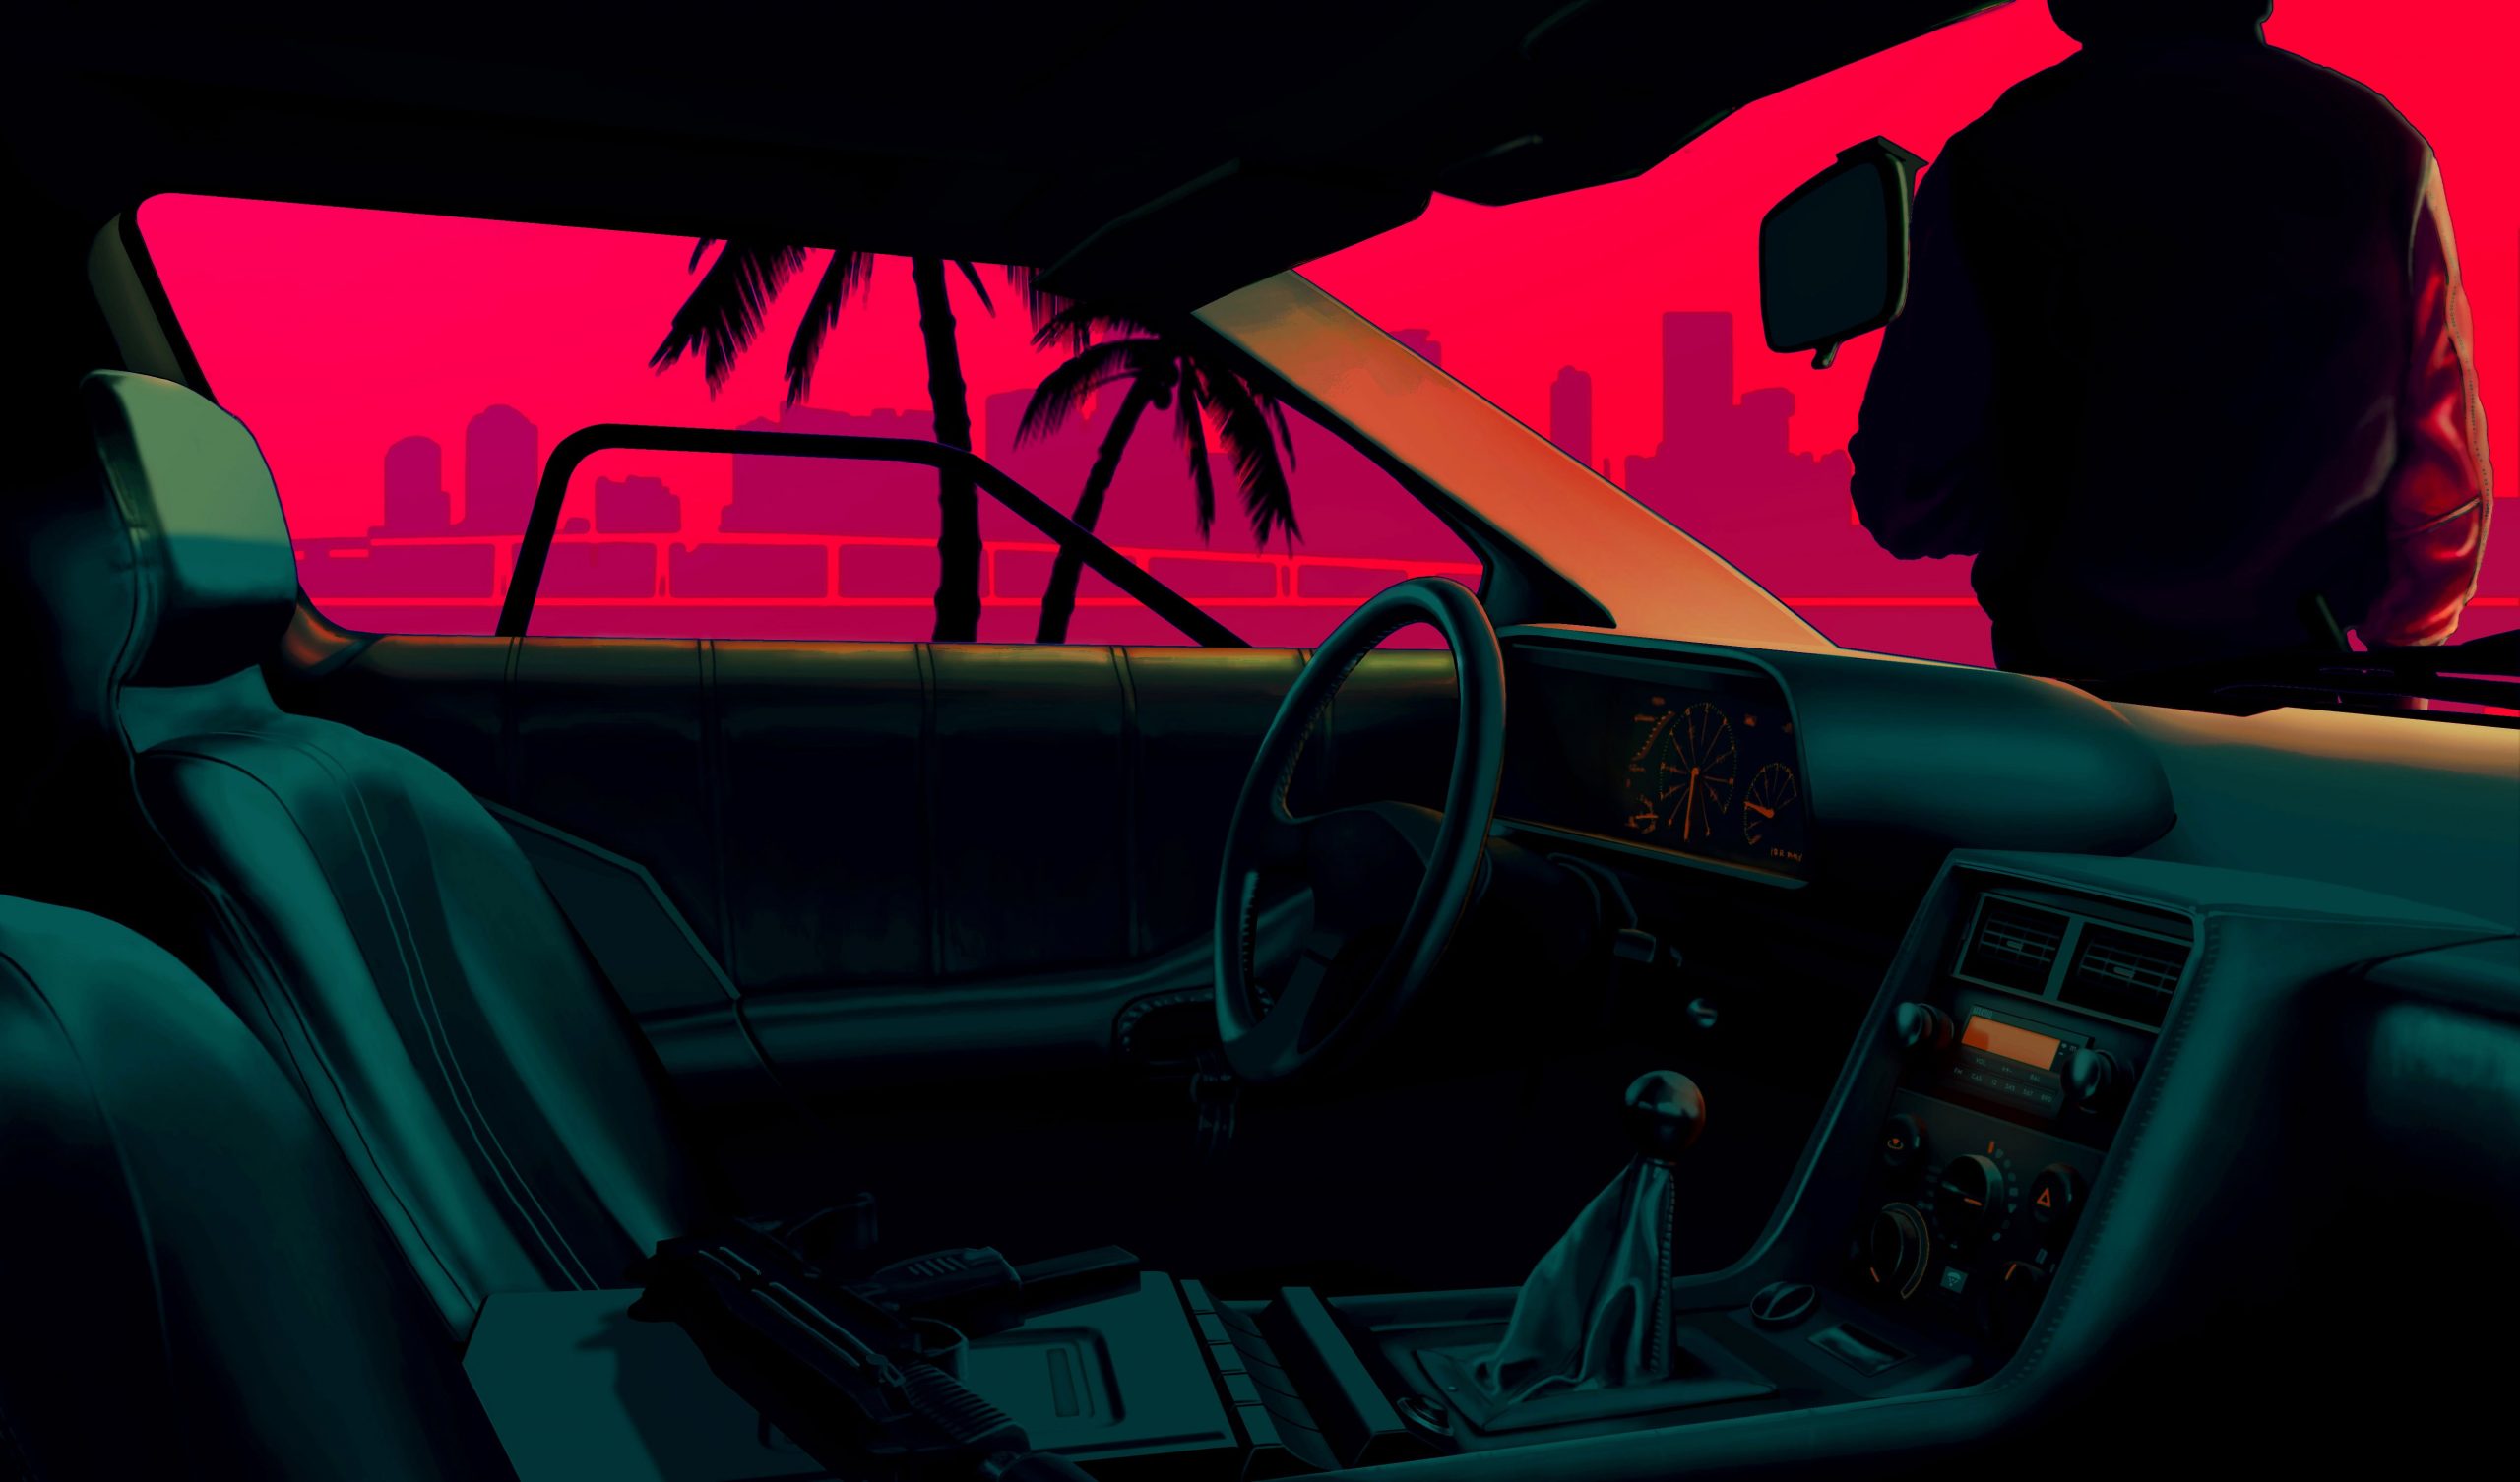 Black car interior wallpaper illustration, video games, Hotline Miami, DMC DeLorean